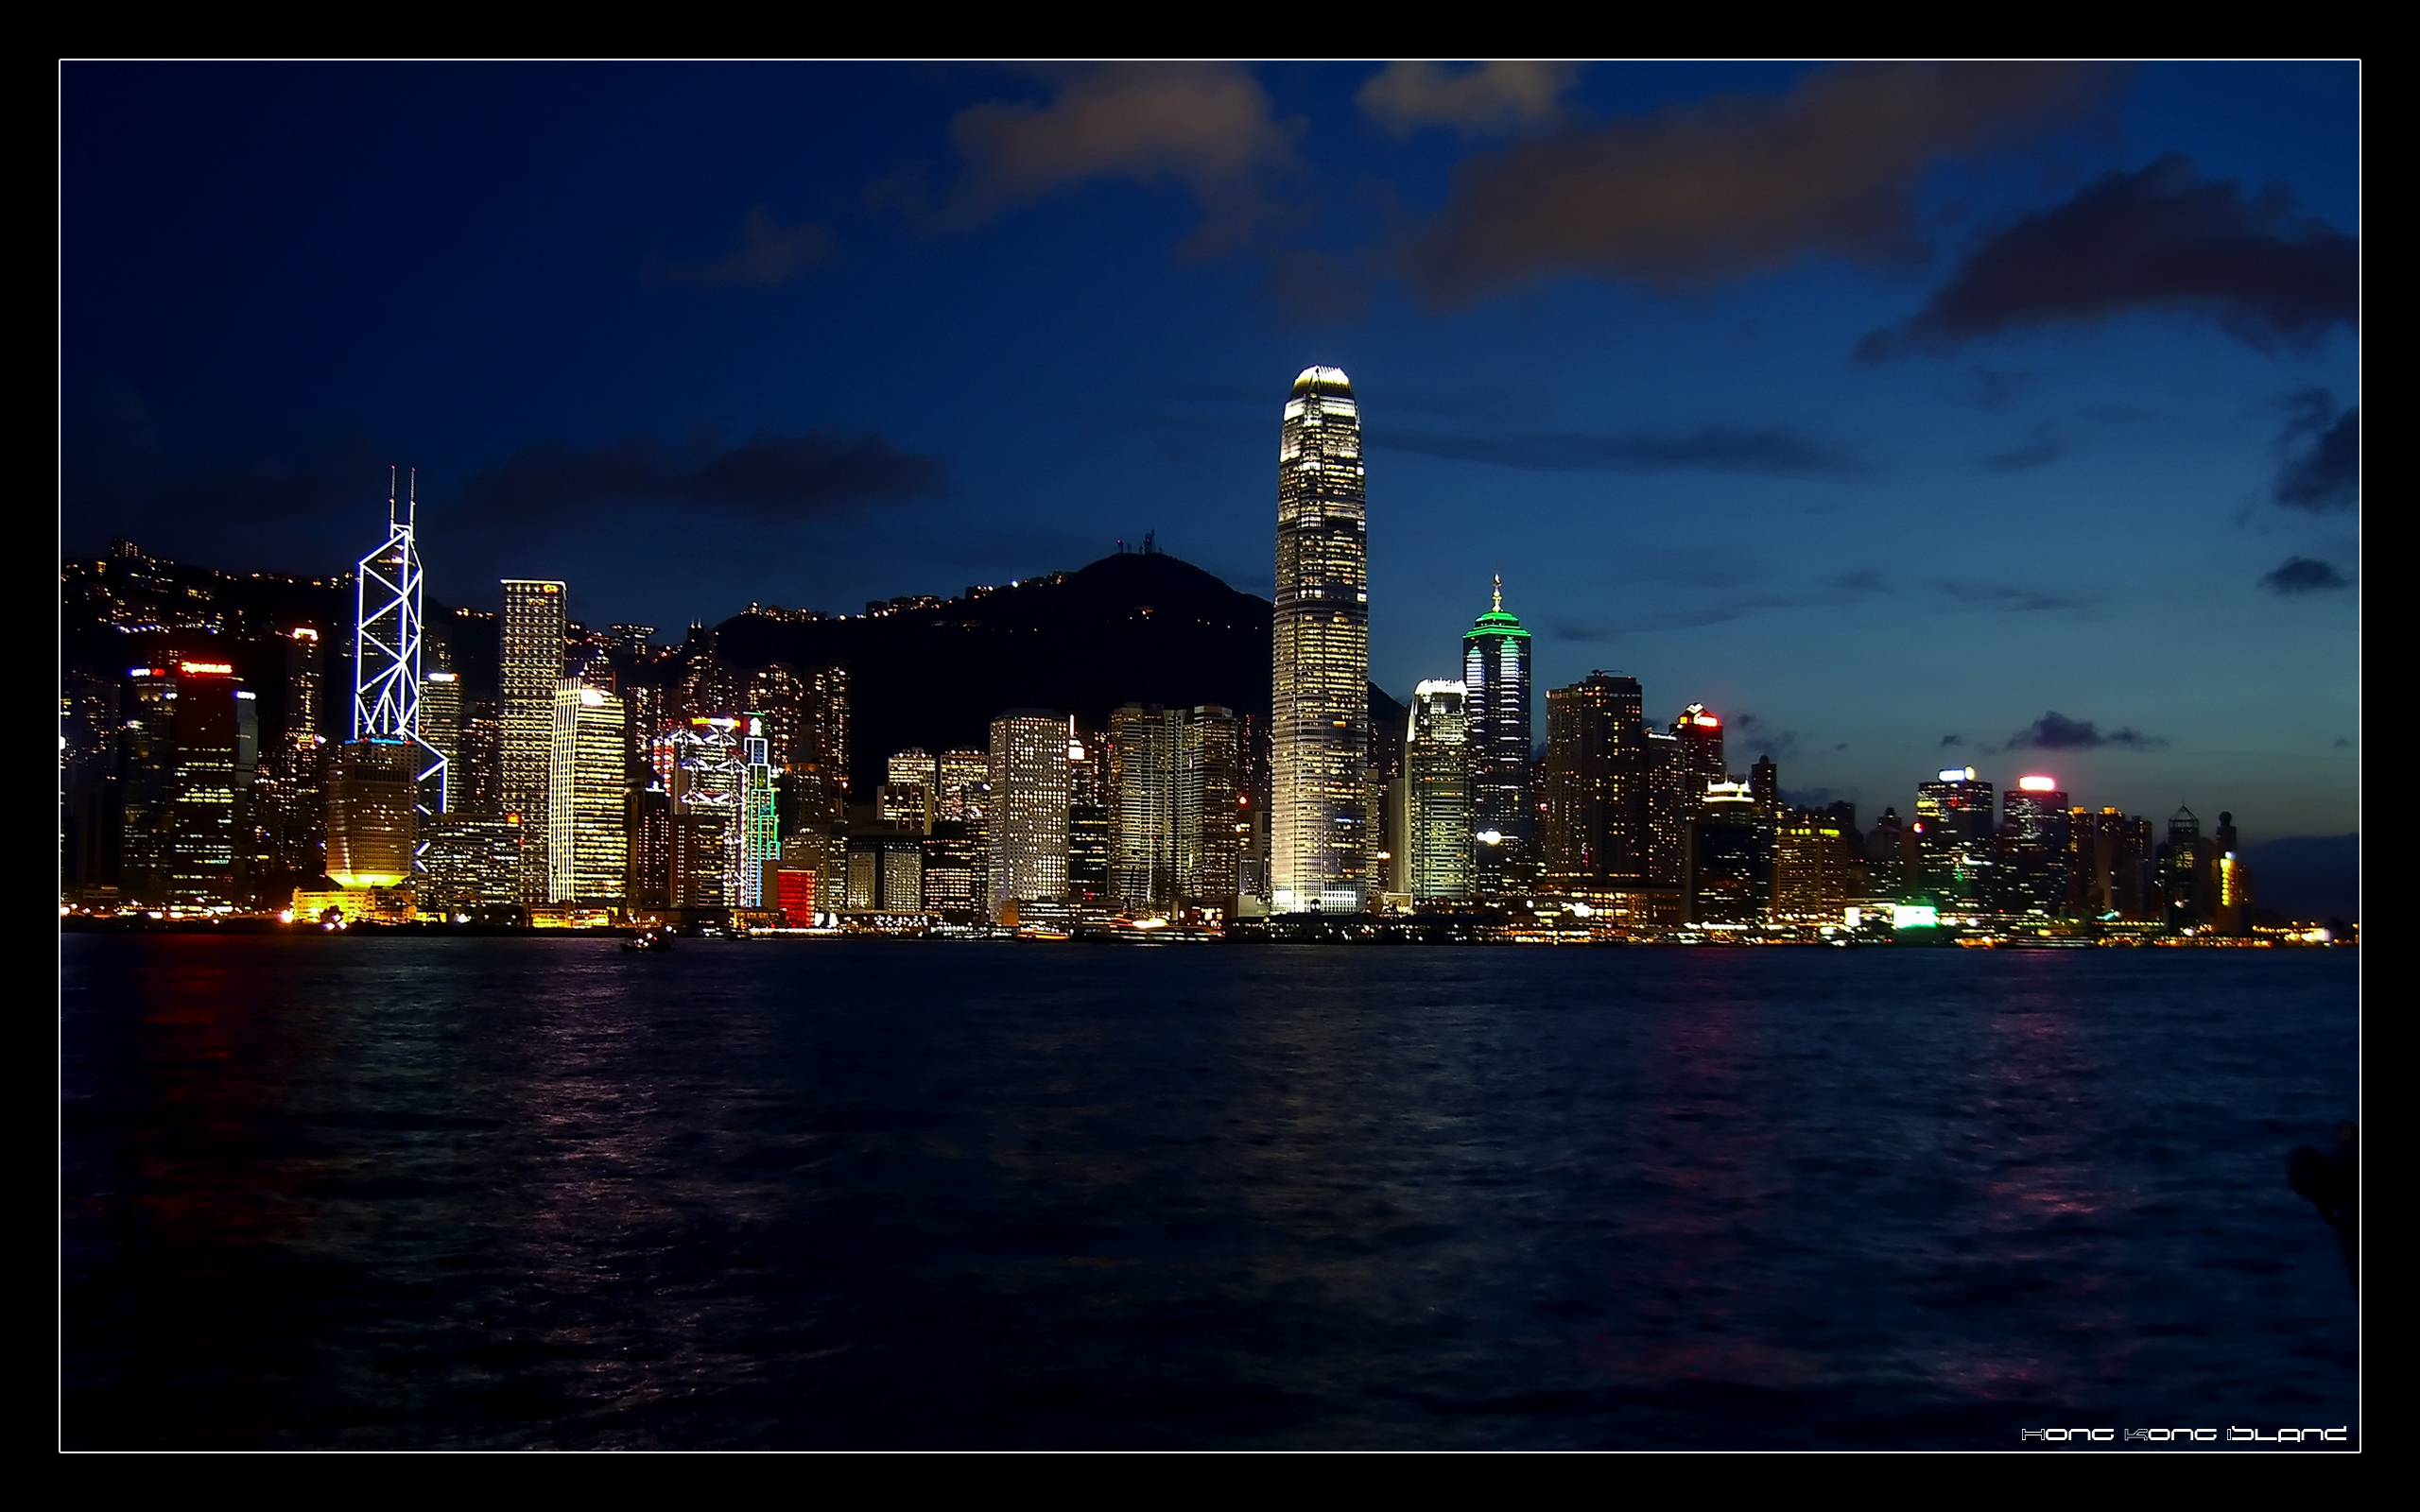 Hong Kong skyline at night with bright city lights.